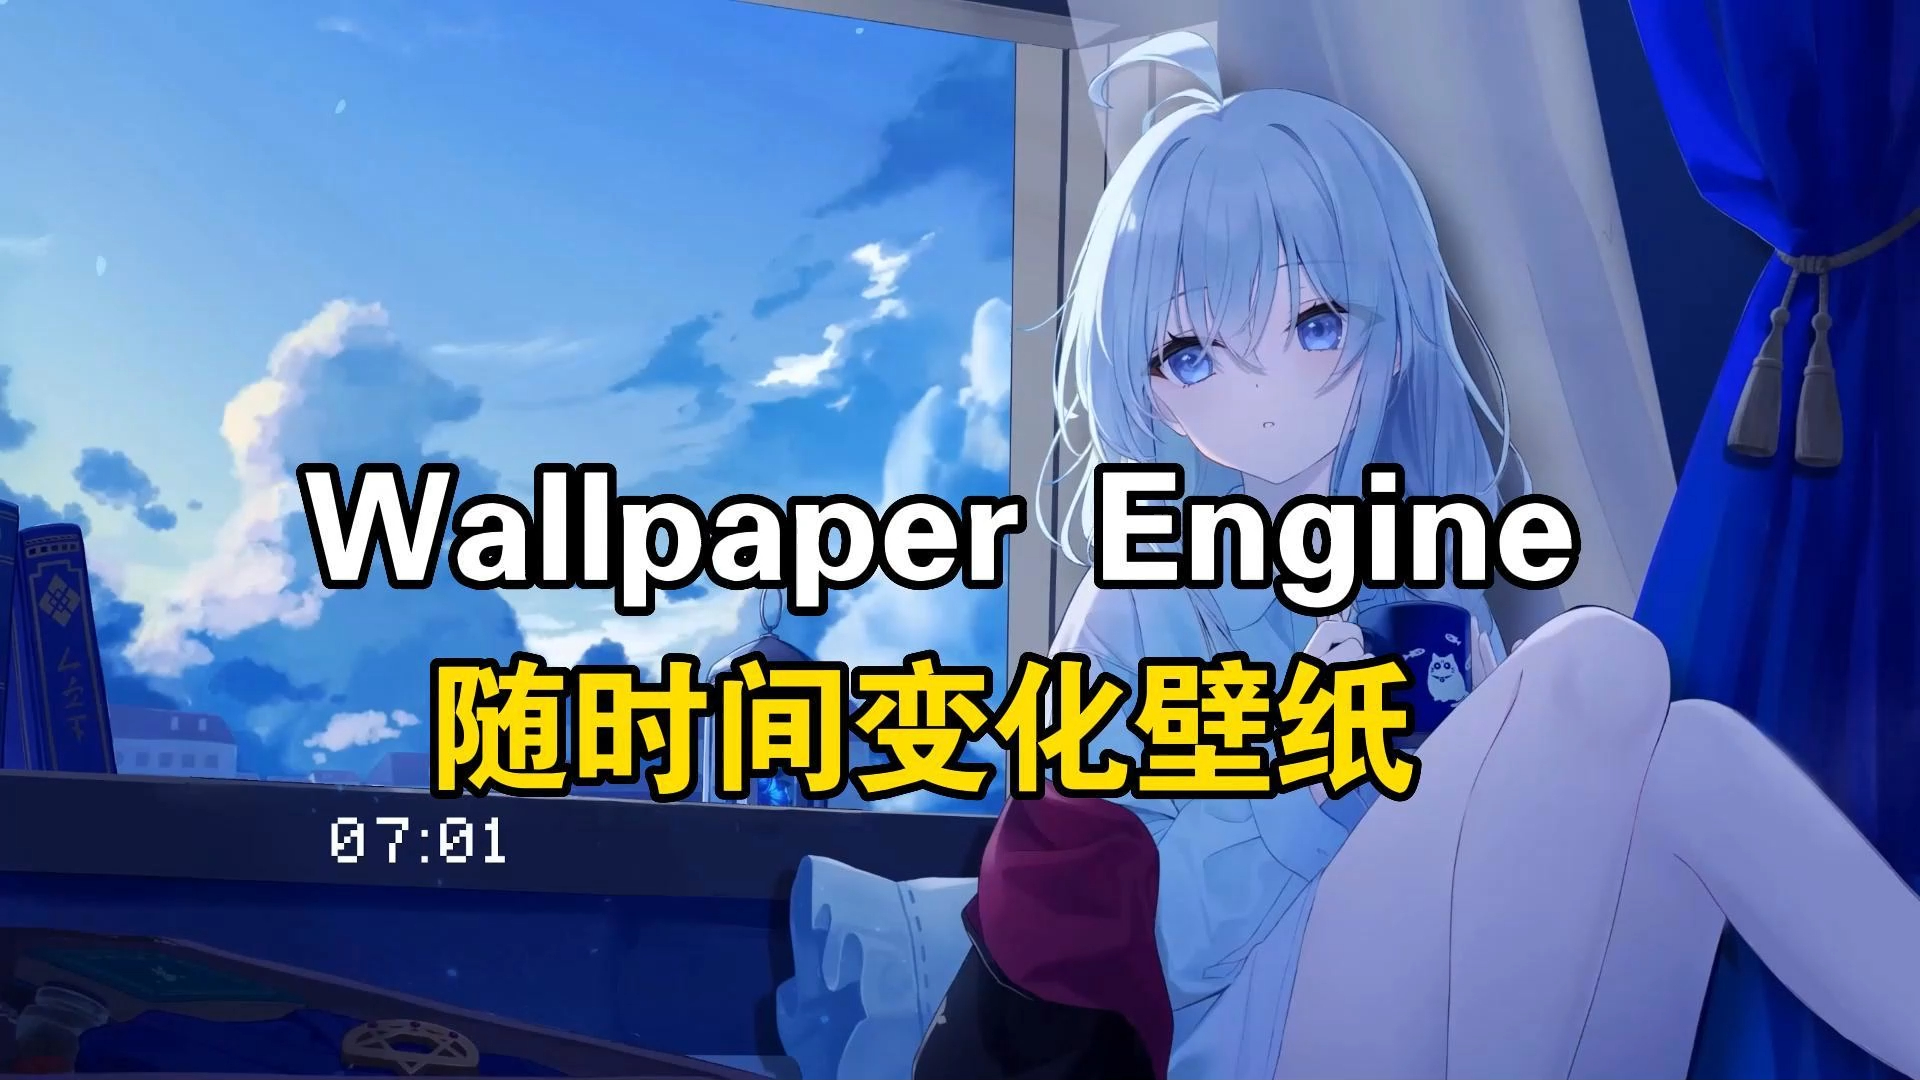 Wallpaper Engine随时间变化/昼夜交替的壁纸，动态壁纸推荐，机械师笔记本